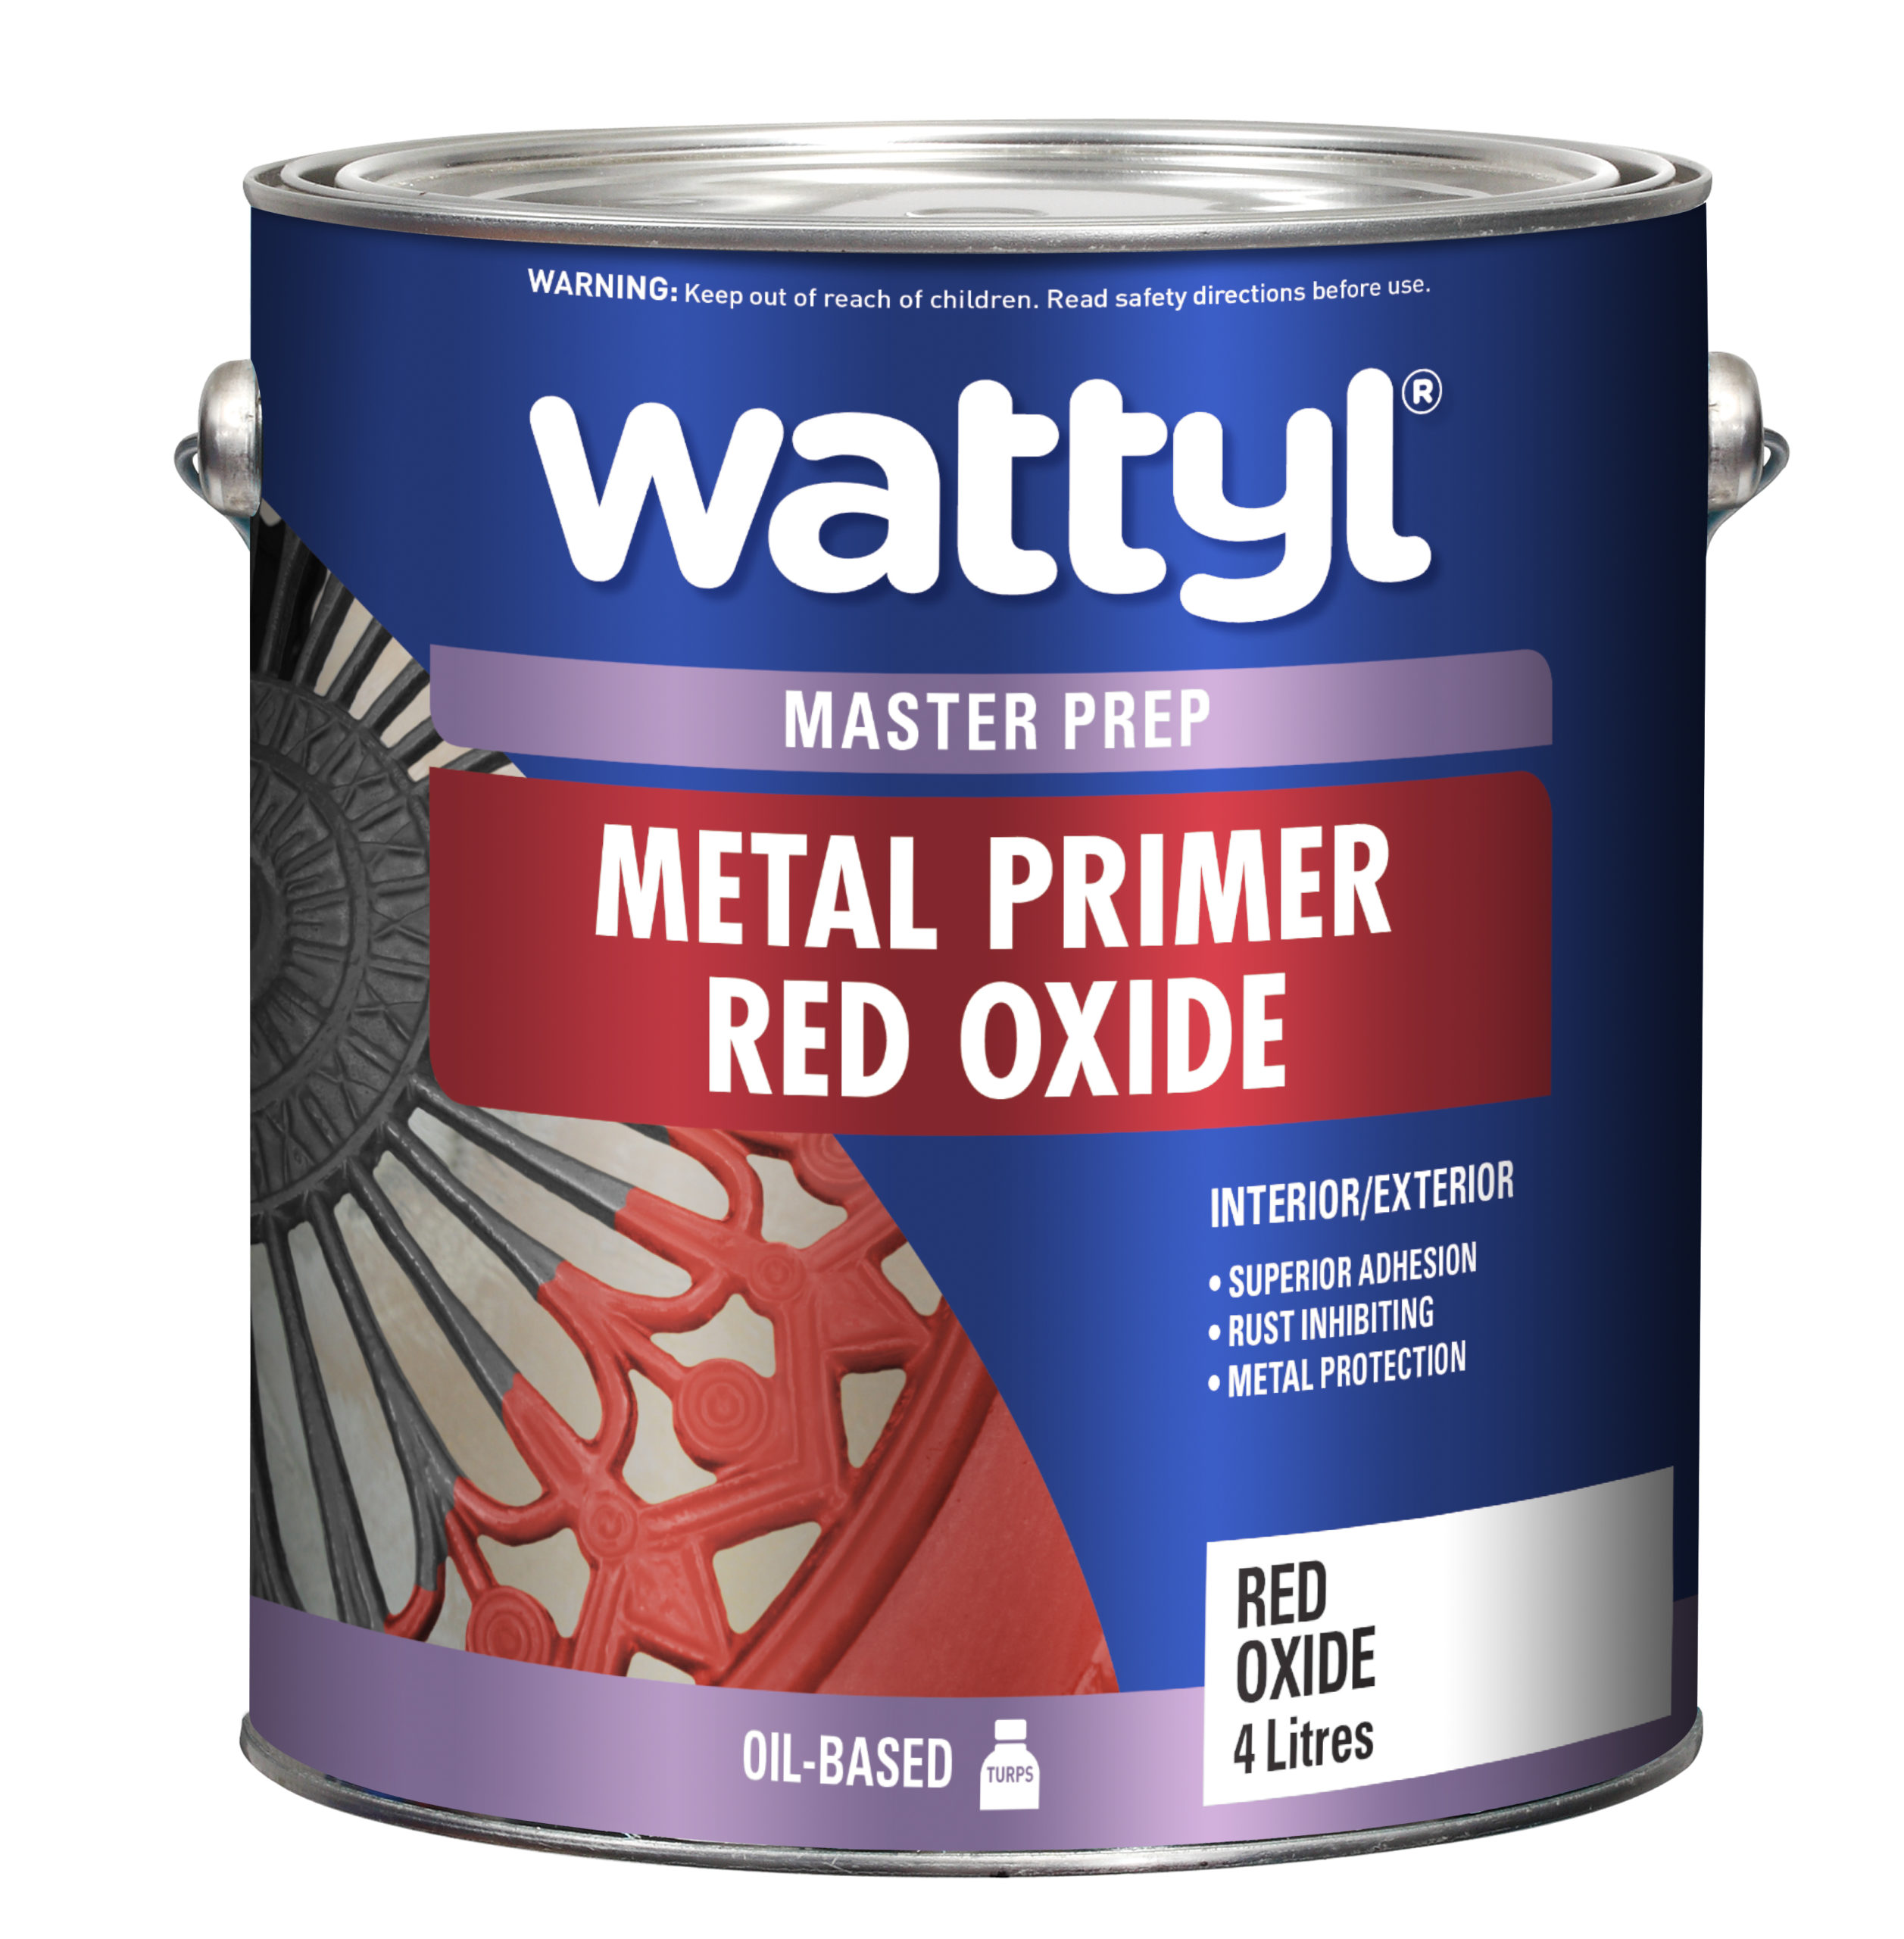 Master Prep Metal Primer